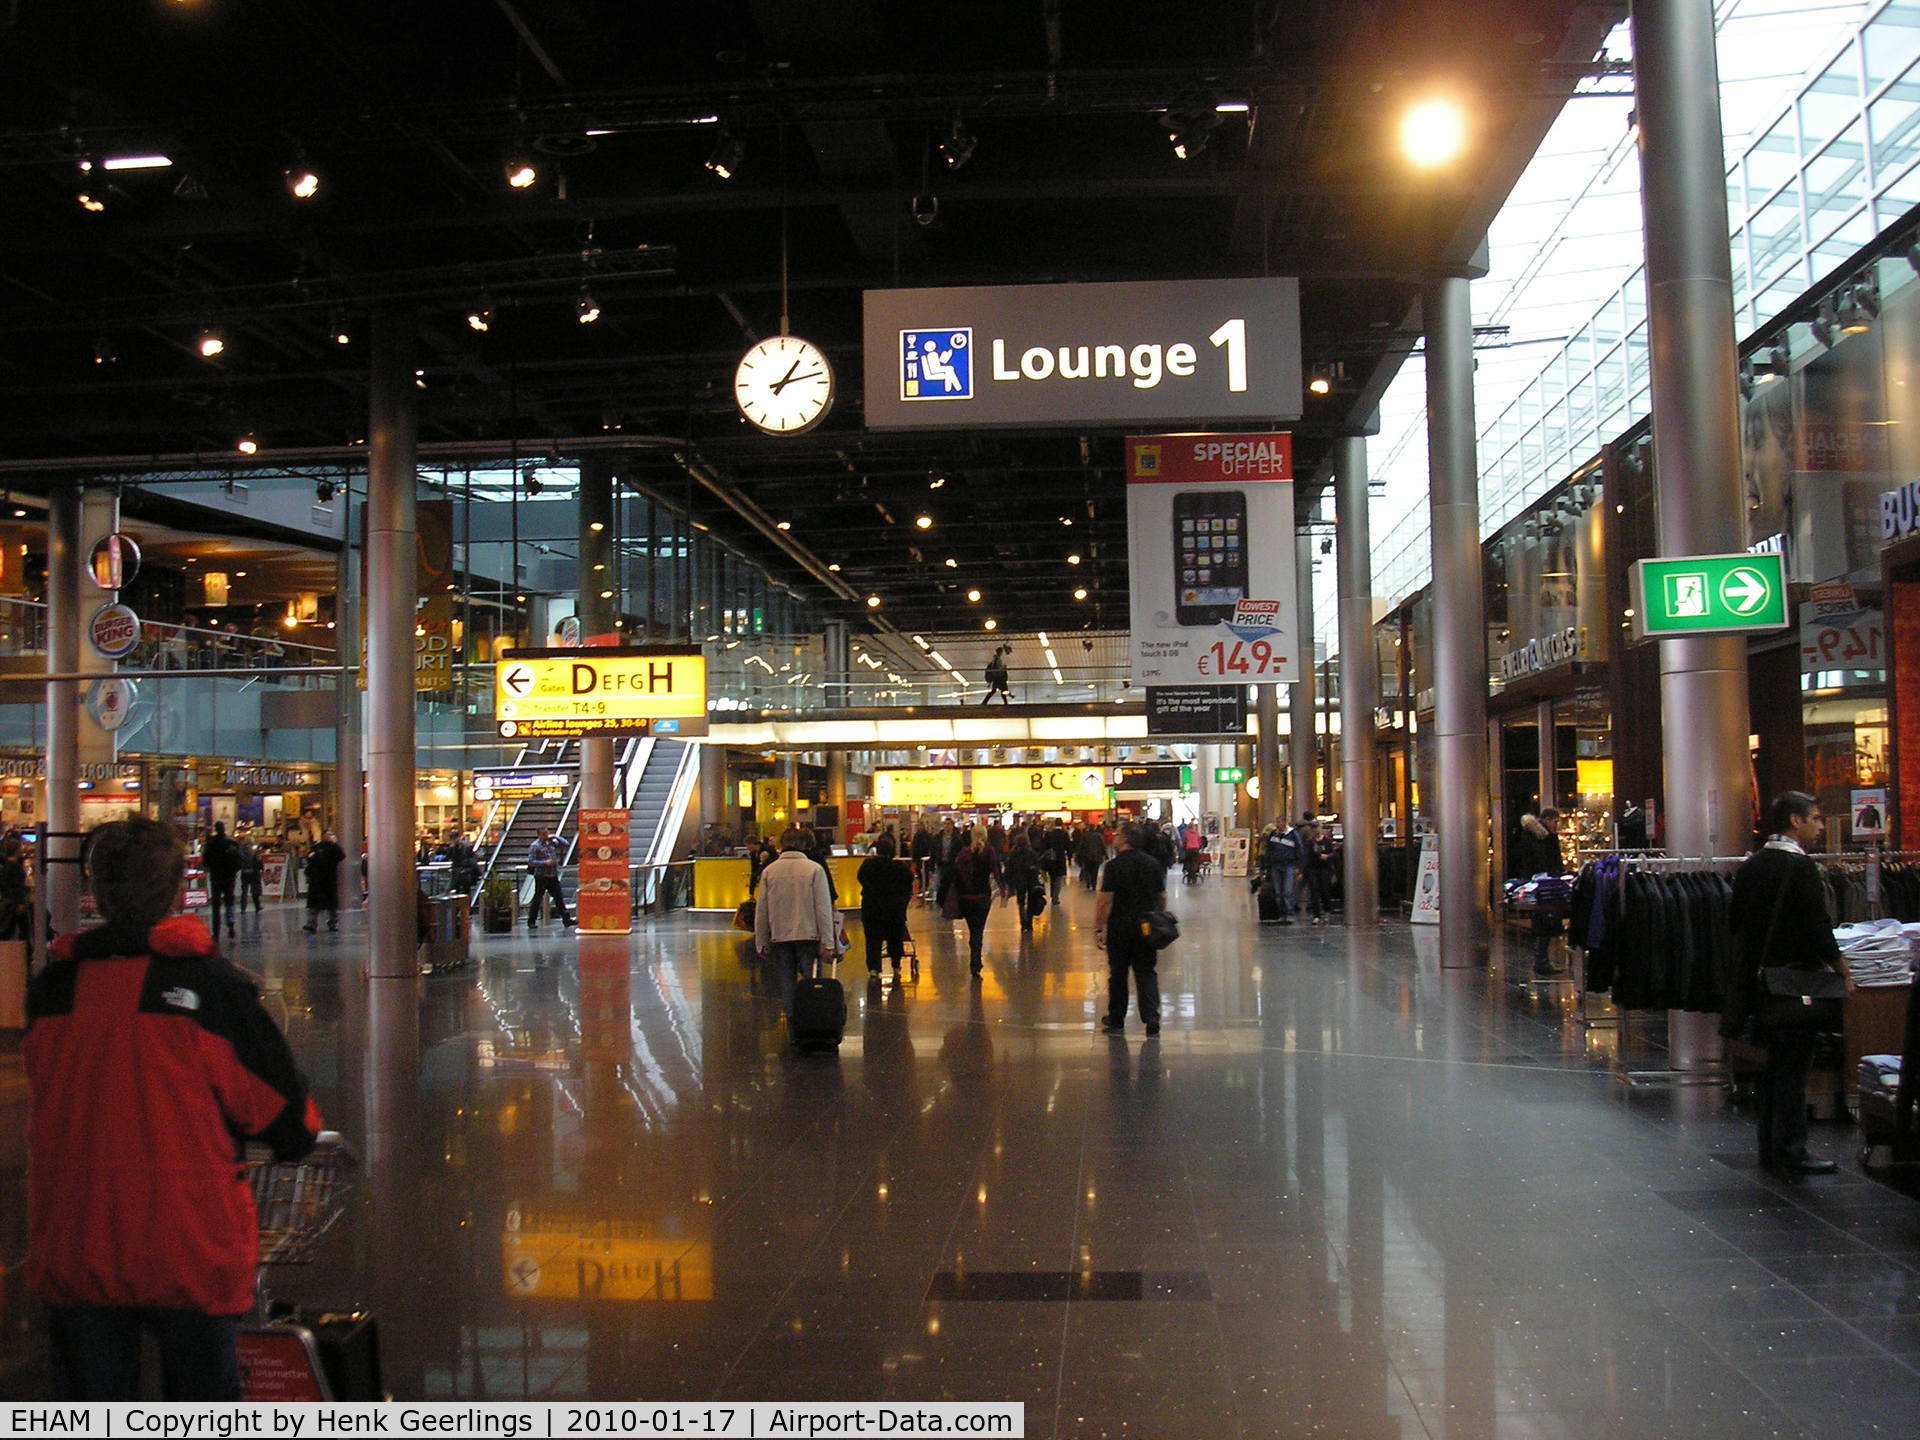 Amsterdam Schiphol Airport, Haarlemmermeer, near Amsterdam Netherlands (EHAM) - Departure Lounge Schiphol Airport